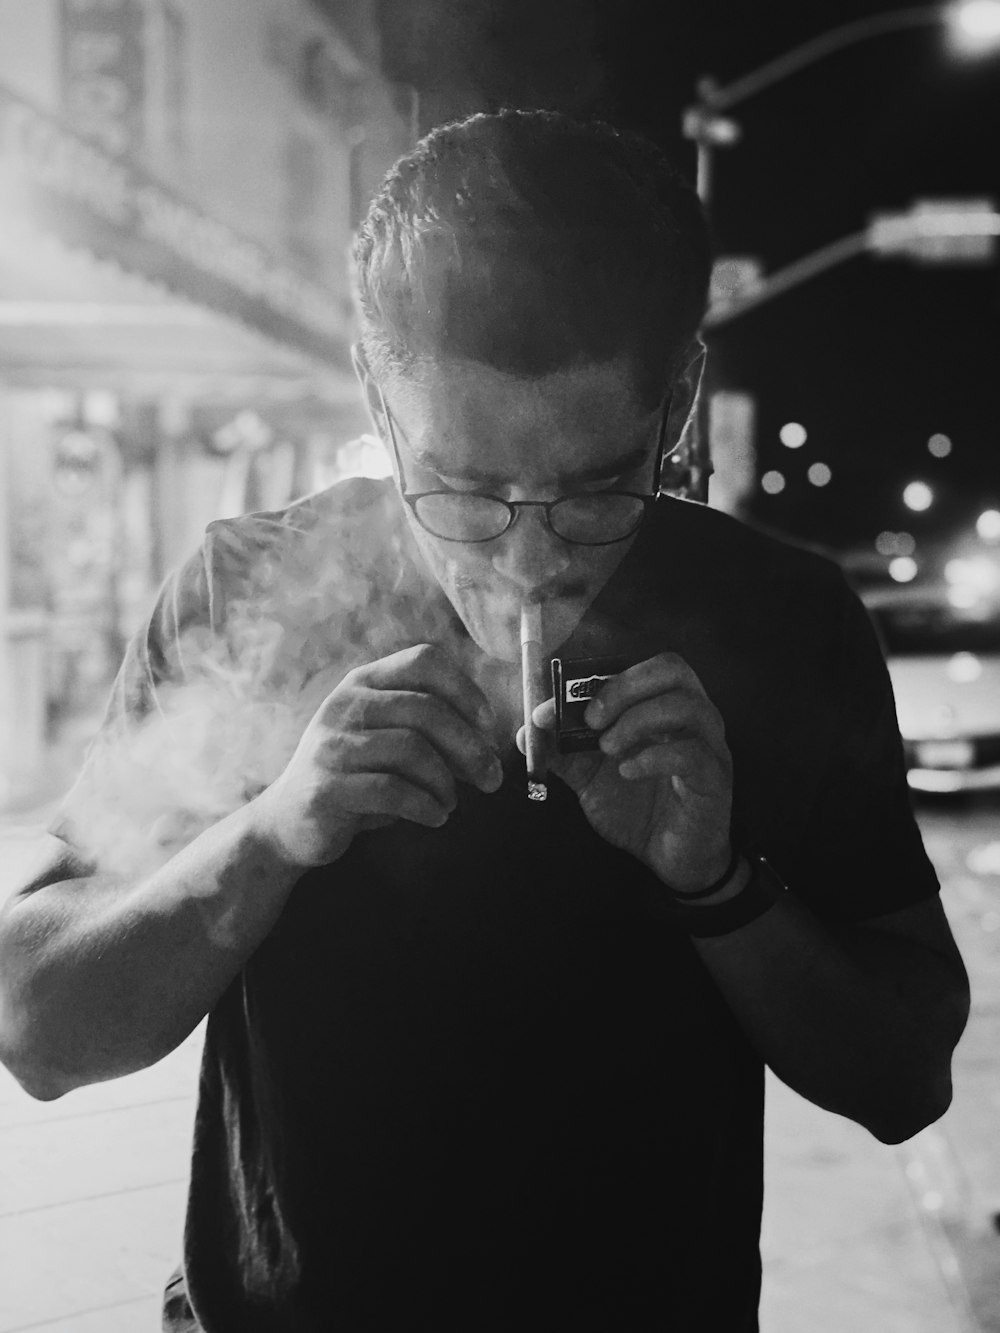 a man smoking a cigarette on a city street